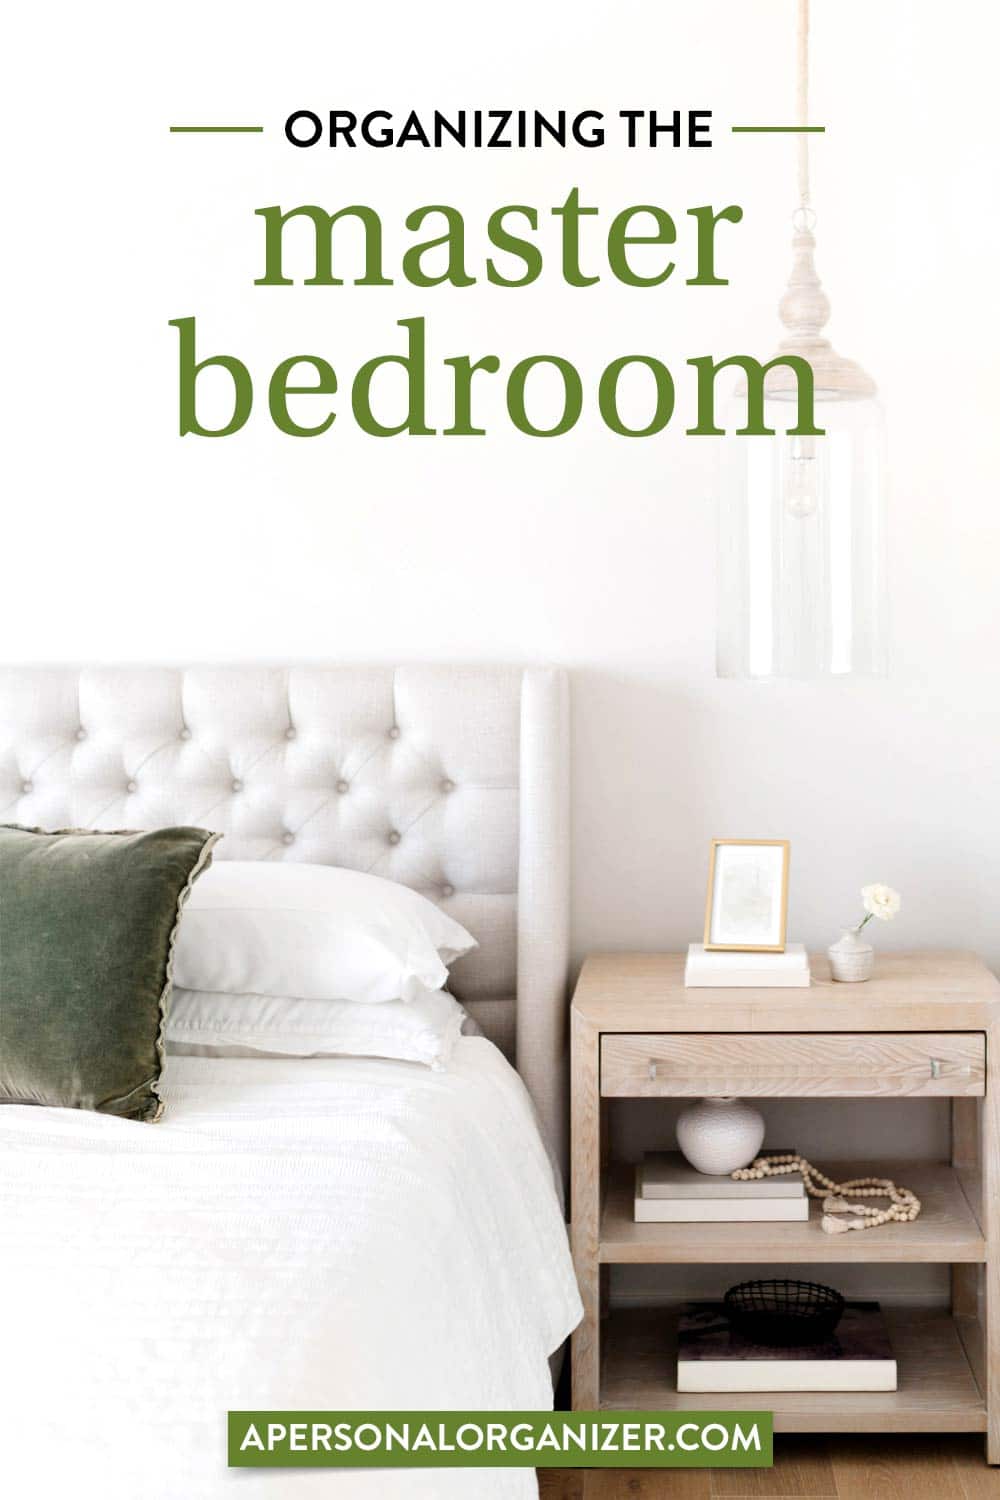 https://apersonalorganizer.com/wp-content/uploads/2021/01/Organizing-The-Master-Bedroom.jpg